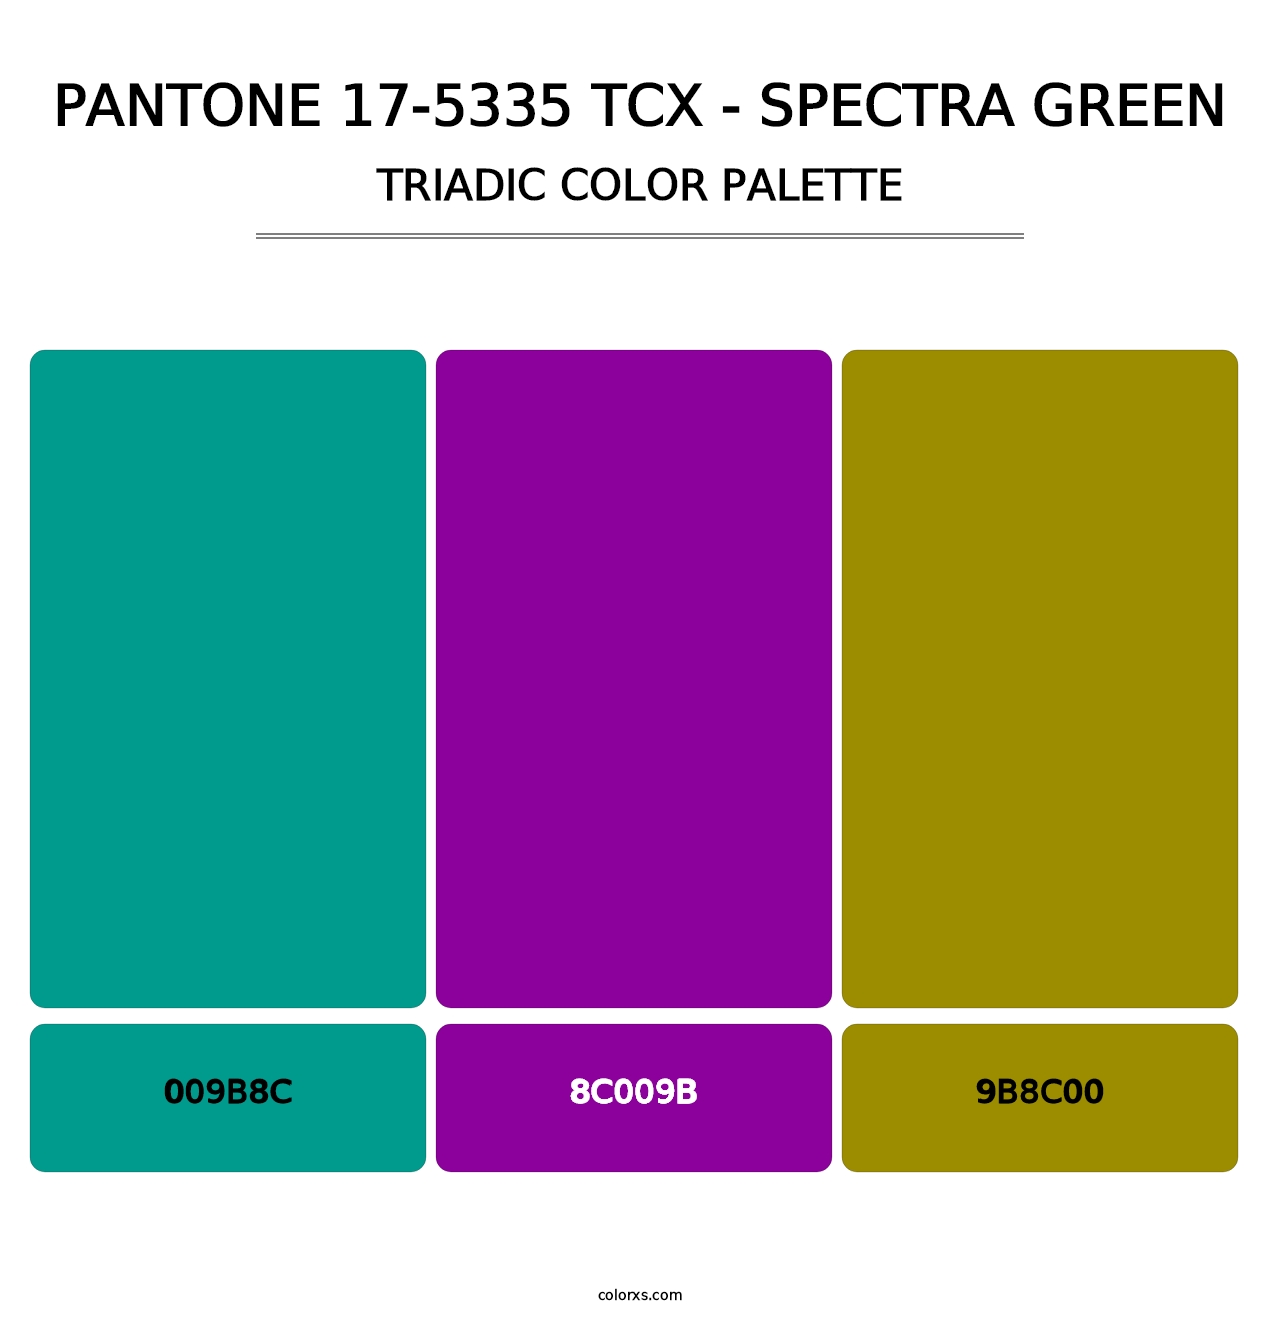 PANTONE 17-5335 TCX - Spectra Green - Triadic Color Palette